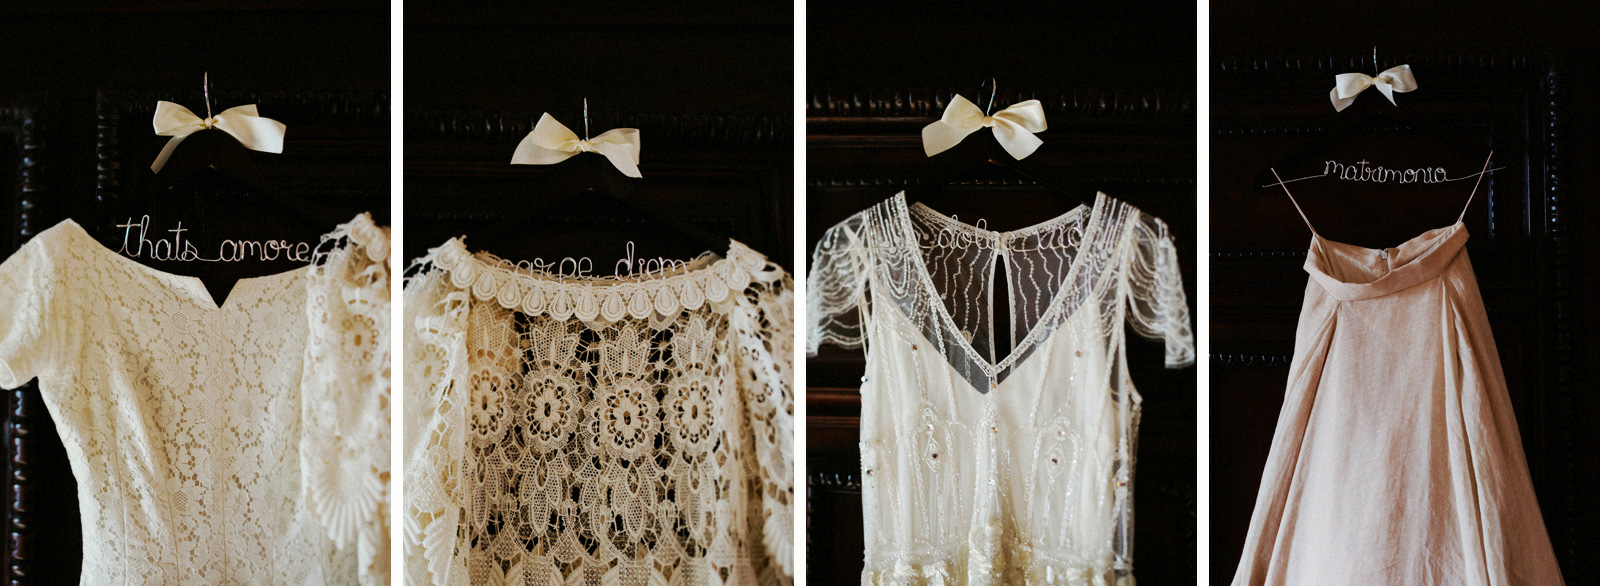 090-wedding-dress